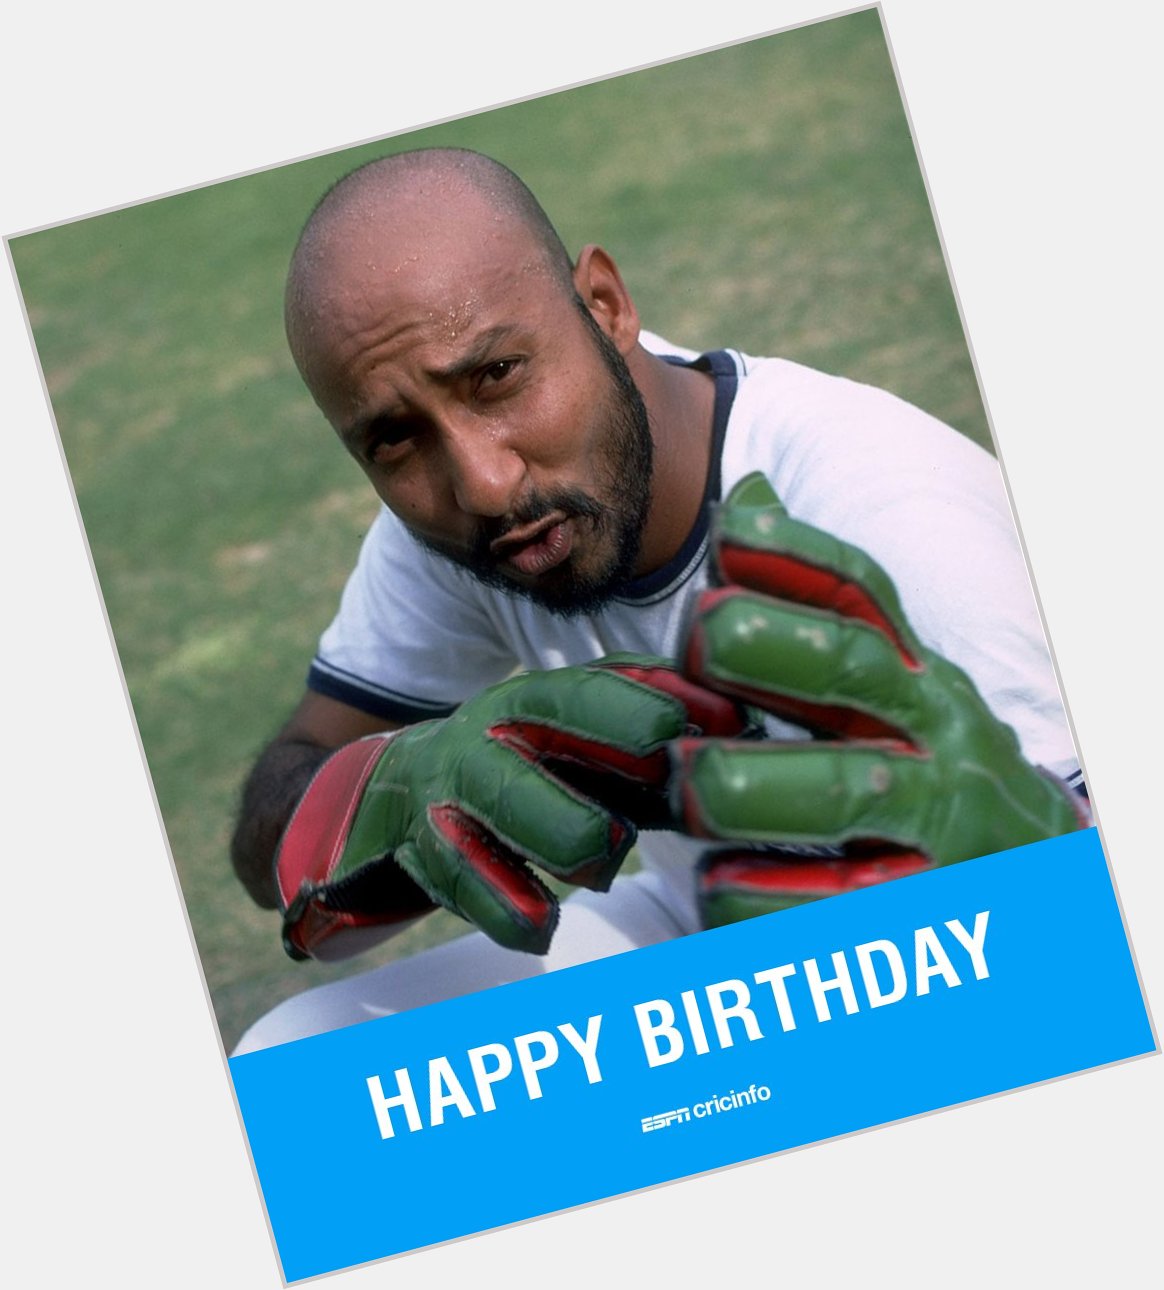   Happy birthday to former India keeper Syed Kirmani! 

 